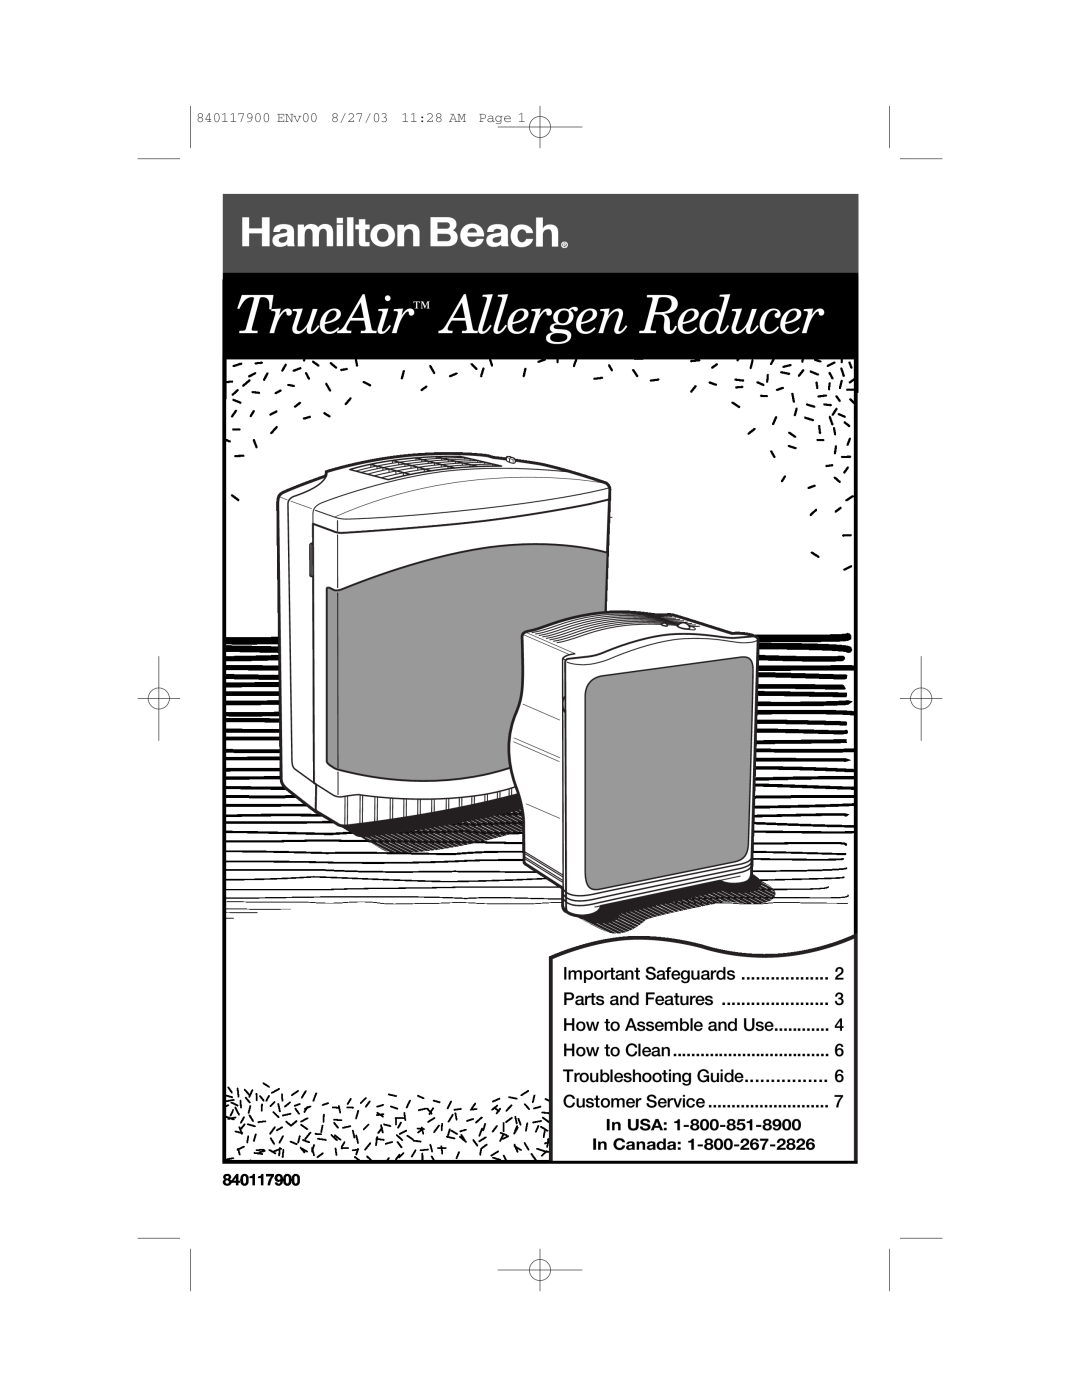 Hamilton Beach 840117900 manual TrueAir Allergen Reducer 